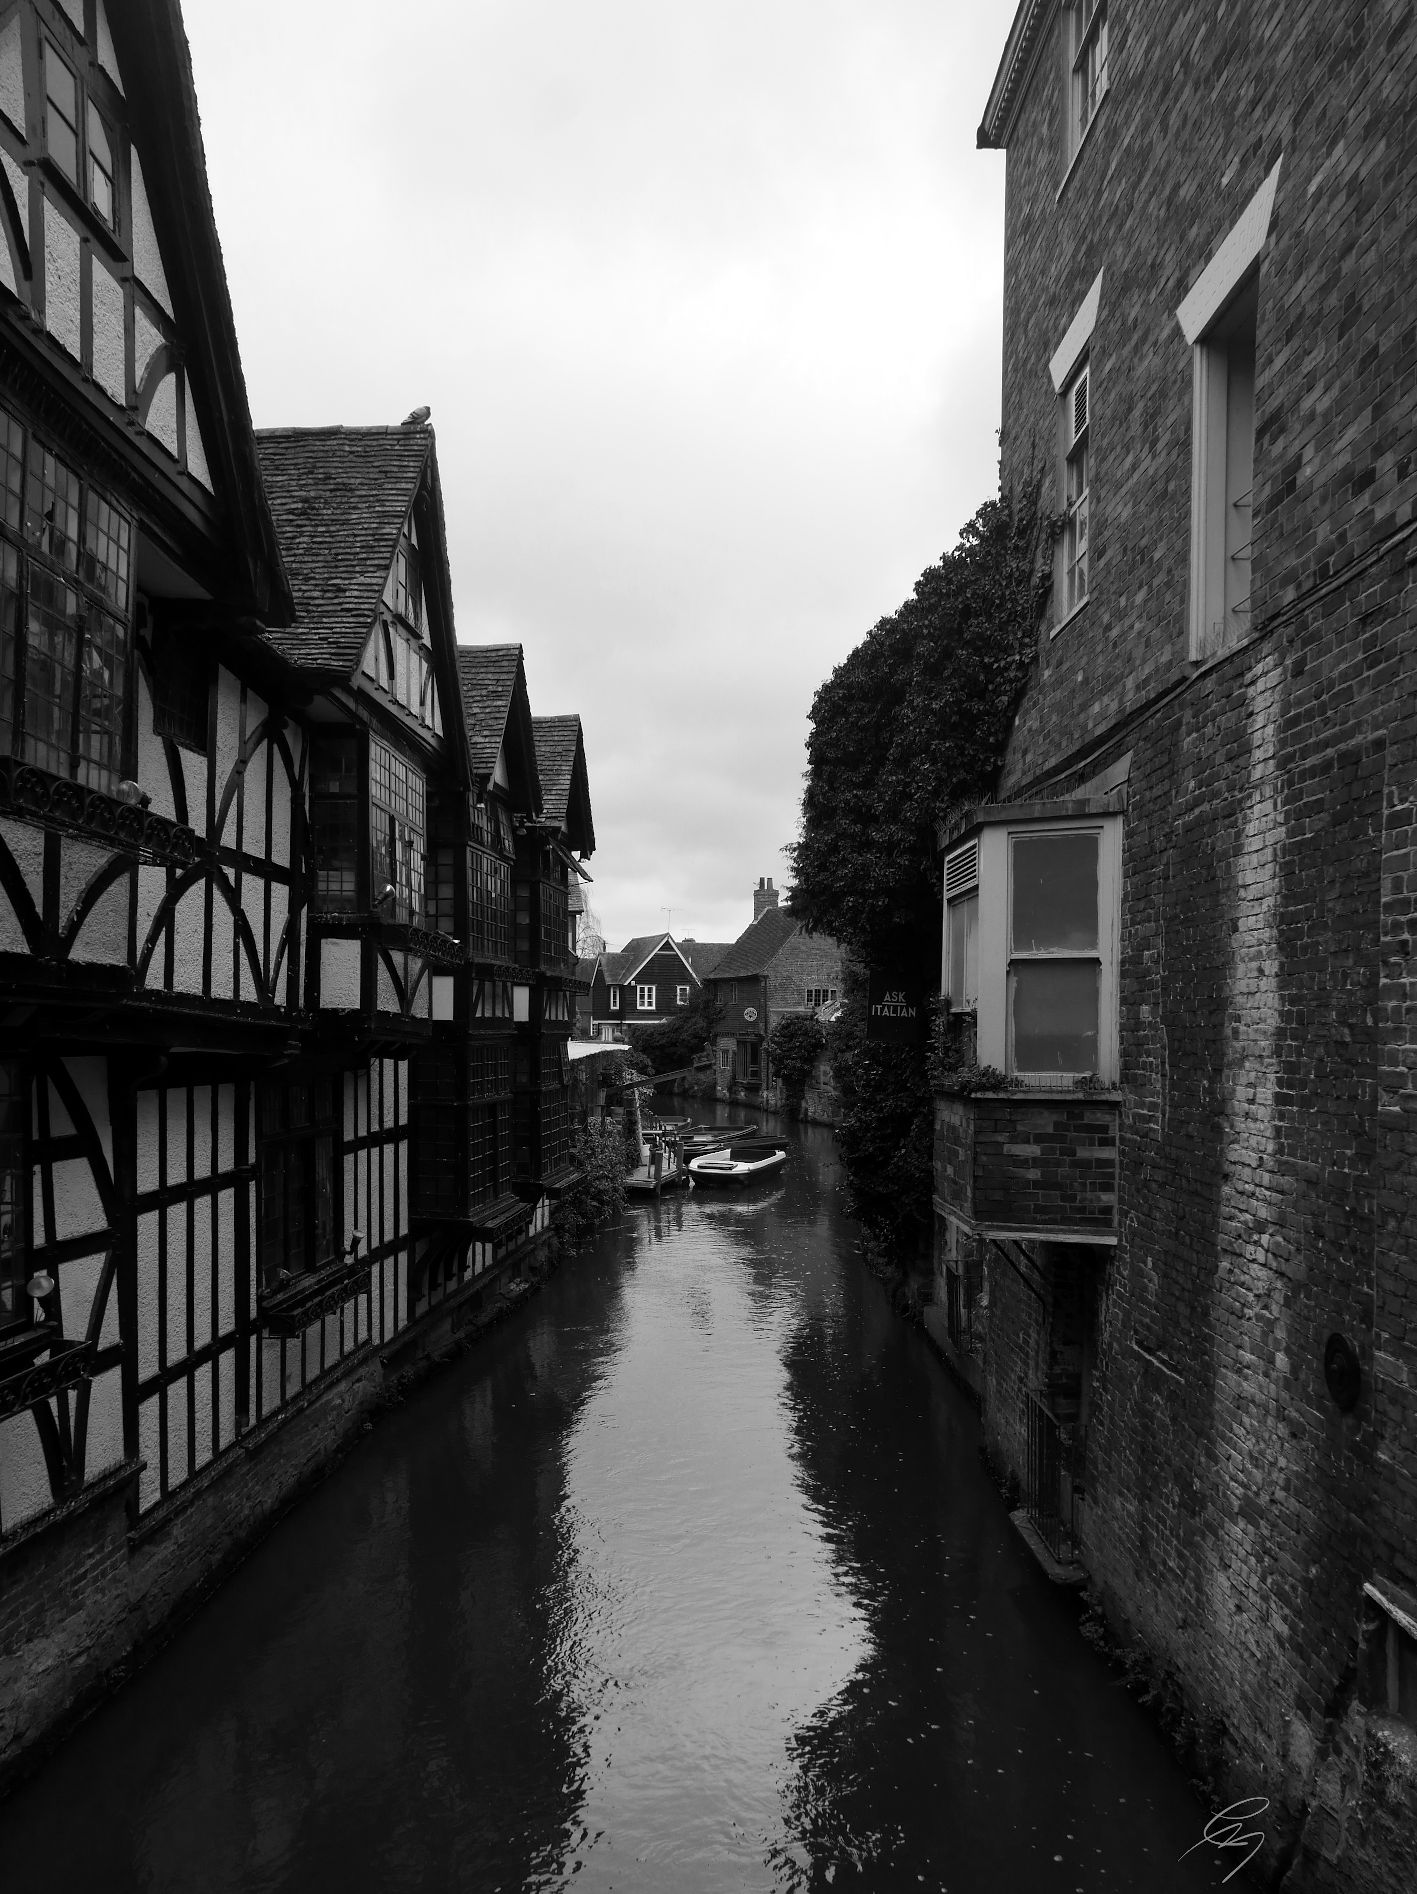 A river in Canterbury, England